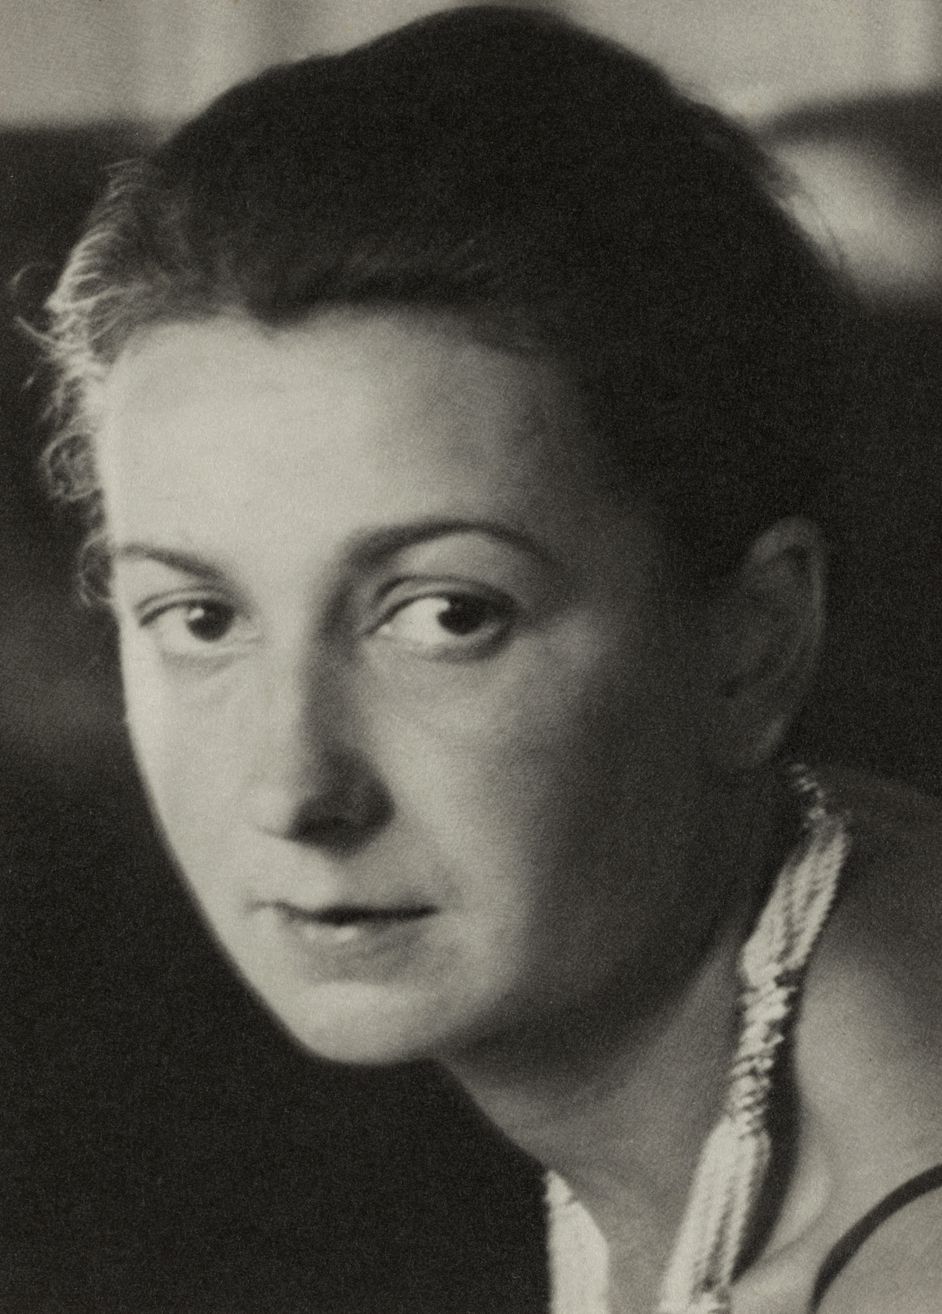 Fotograf*in unbekannt, Porträt Ruth Hildegard Geyer-Raack, um 1930 